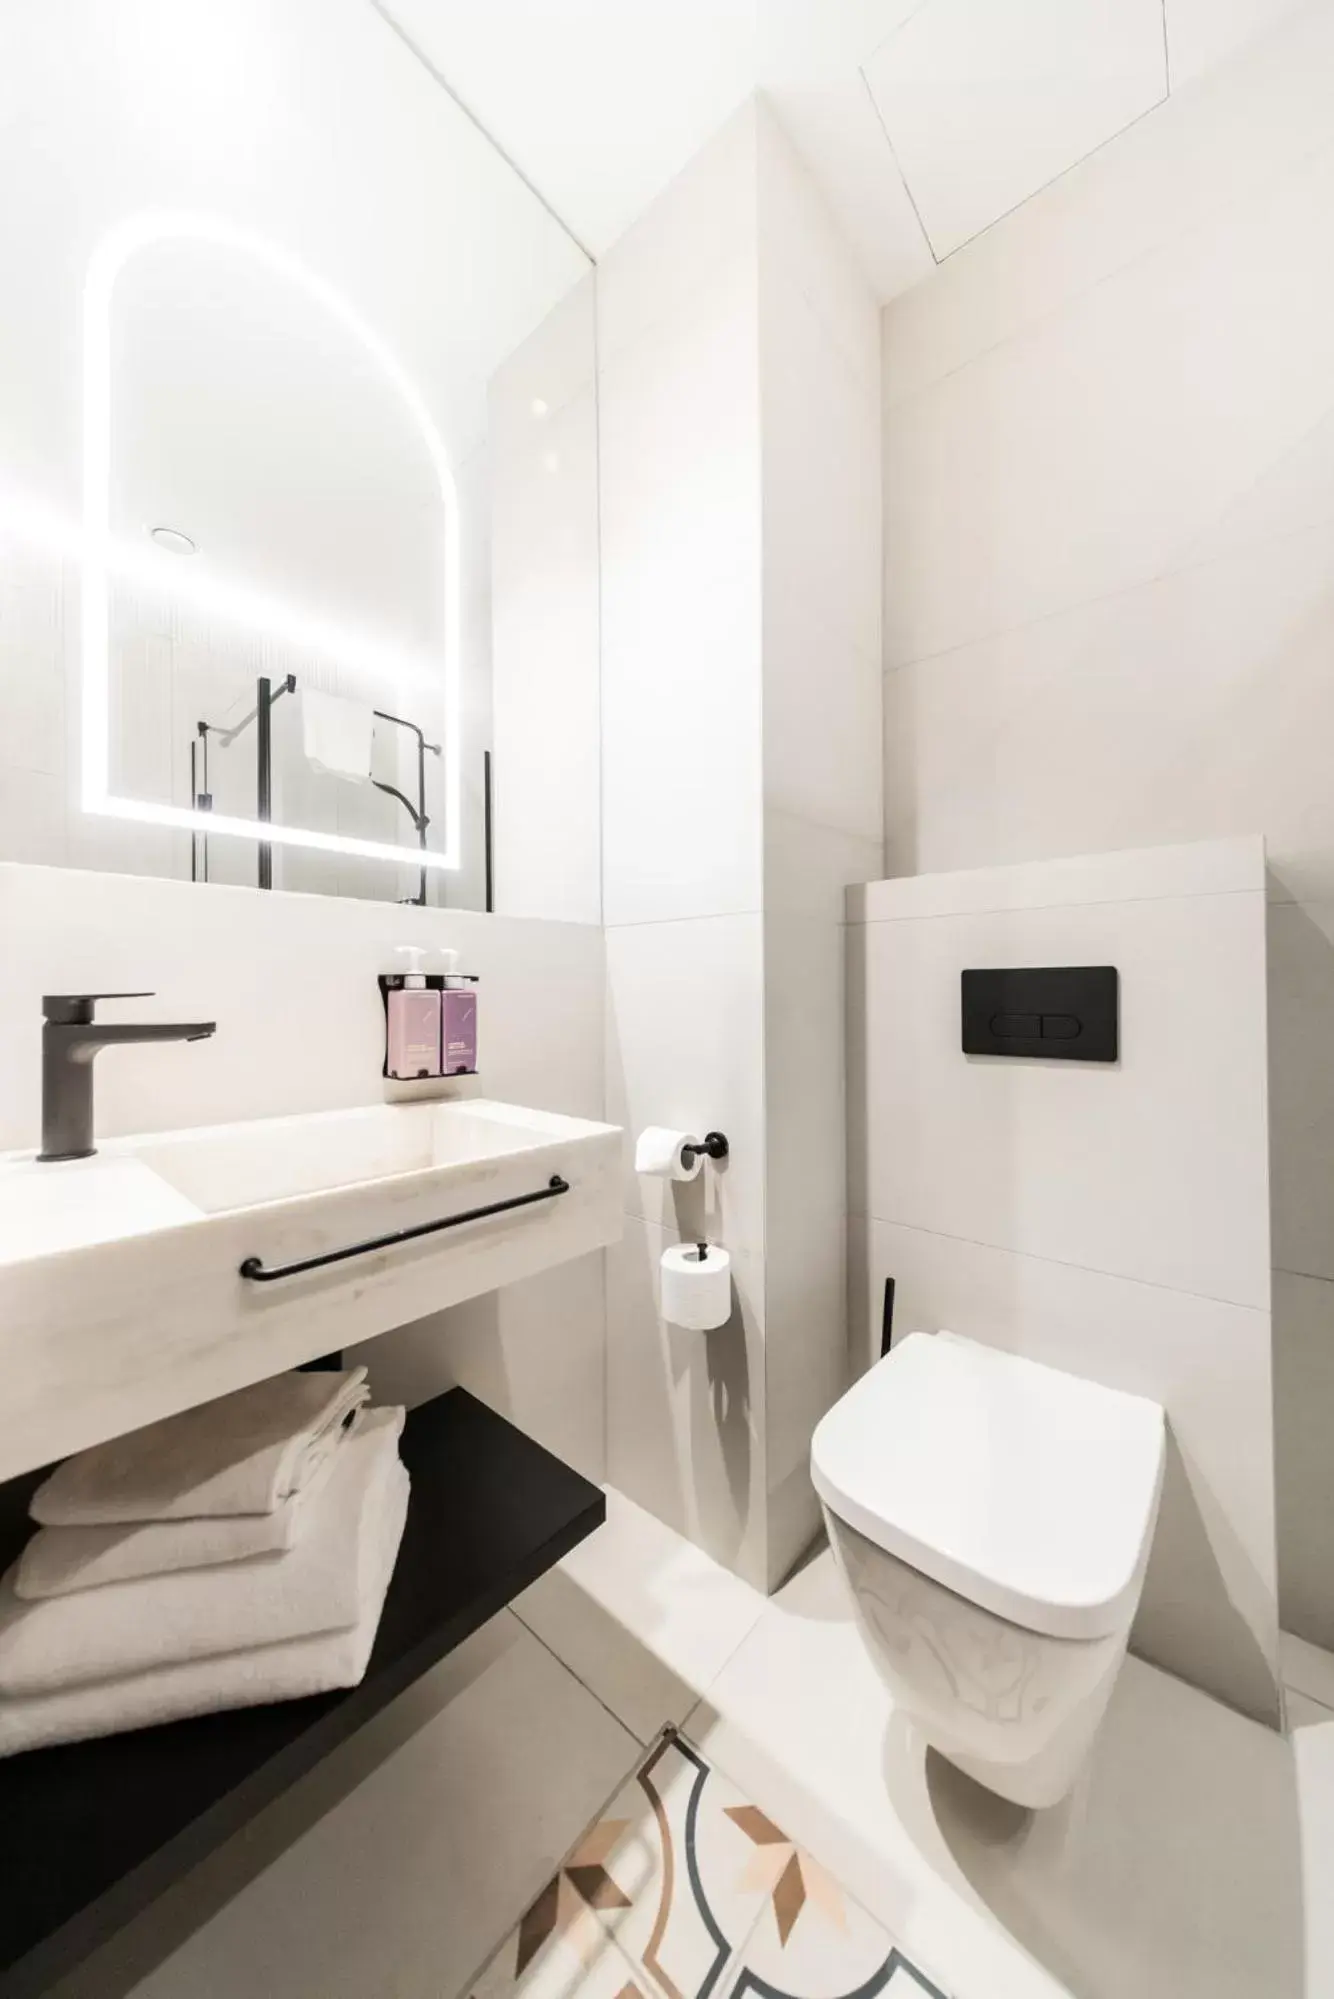 Bathroom in Hotel Valdemars Riga managed by Accor